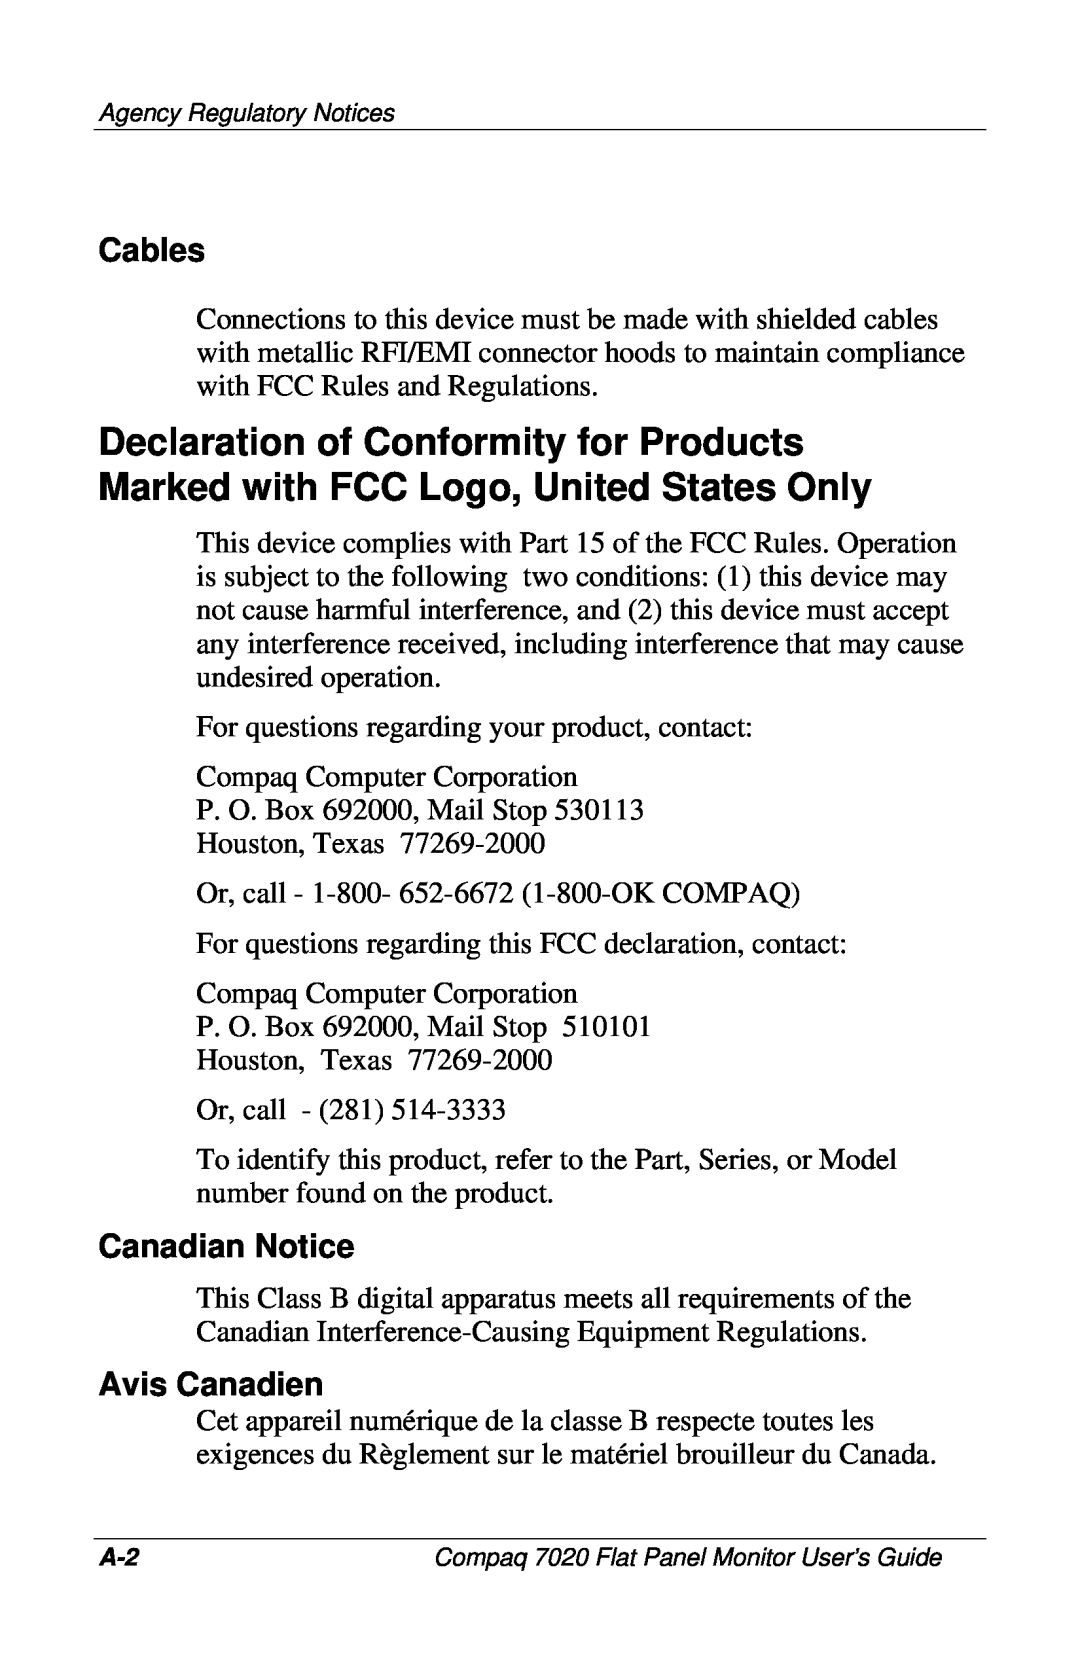 Compaq 7020 manual Cables, Canadian Notice, Avis Canadien 